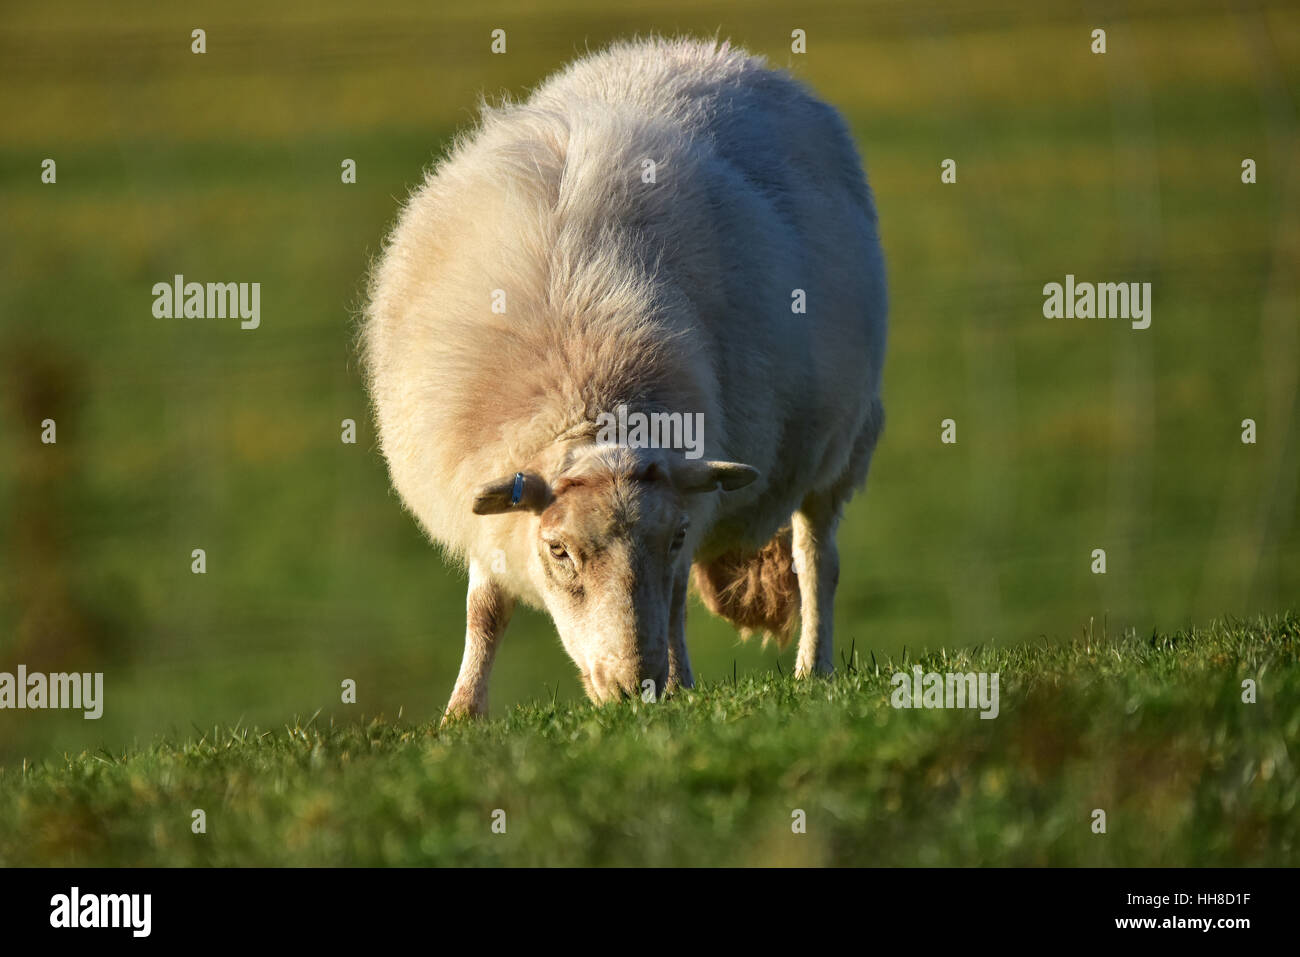 Welsh mountain sheep grazing in a field Stock Photo